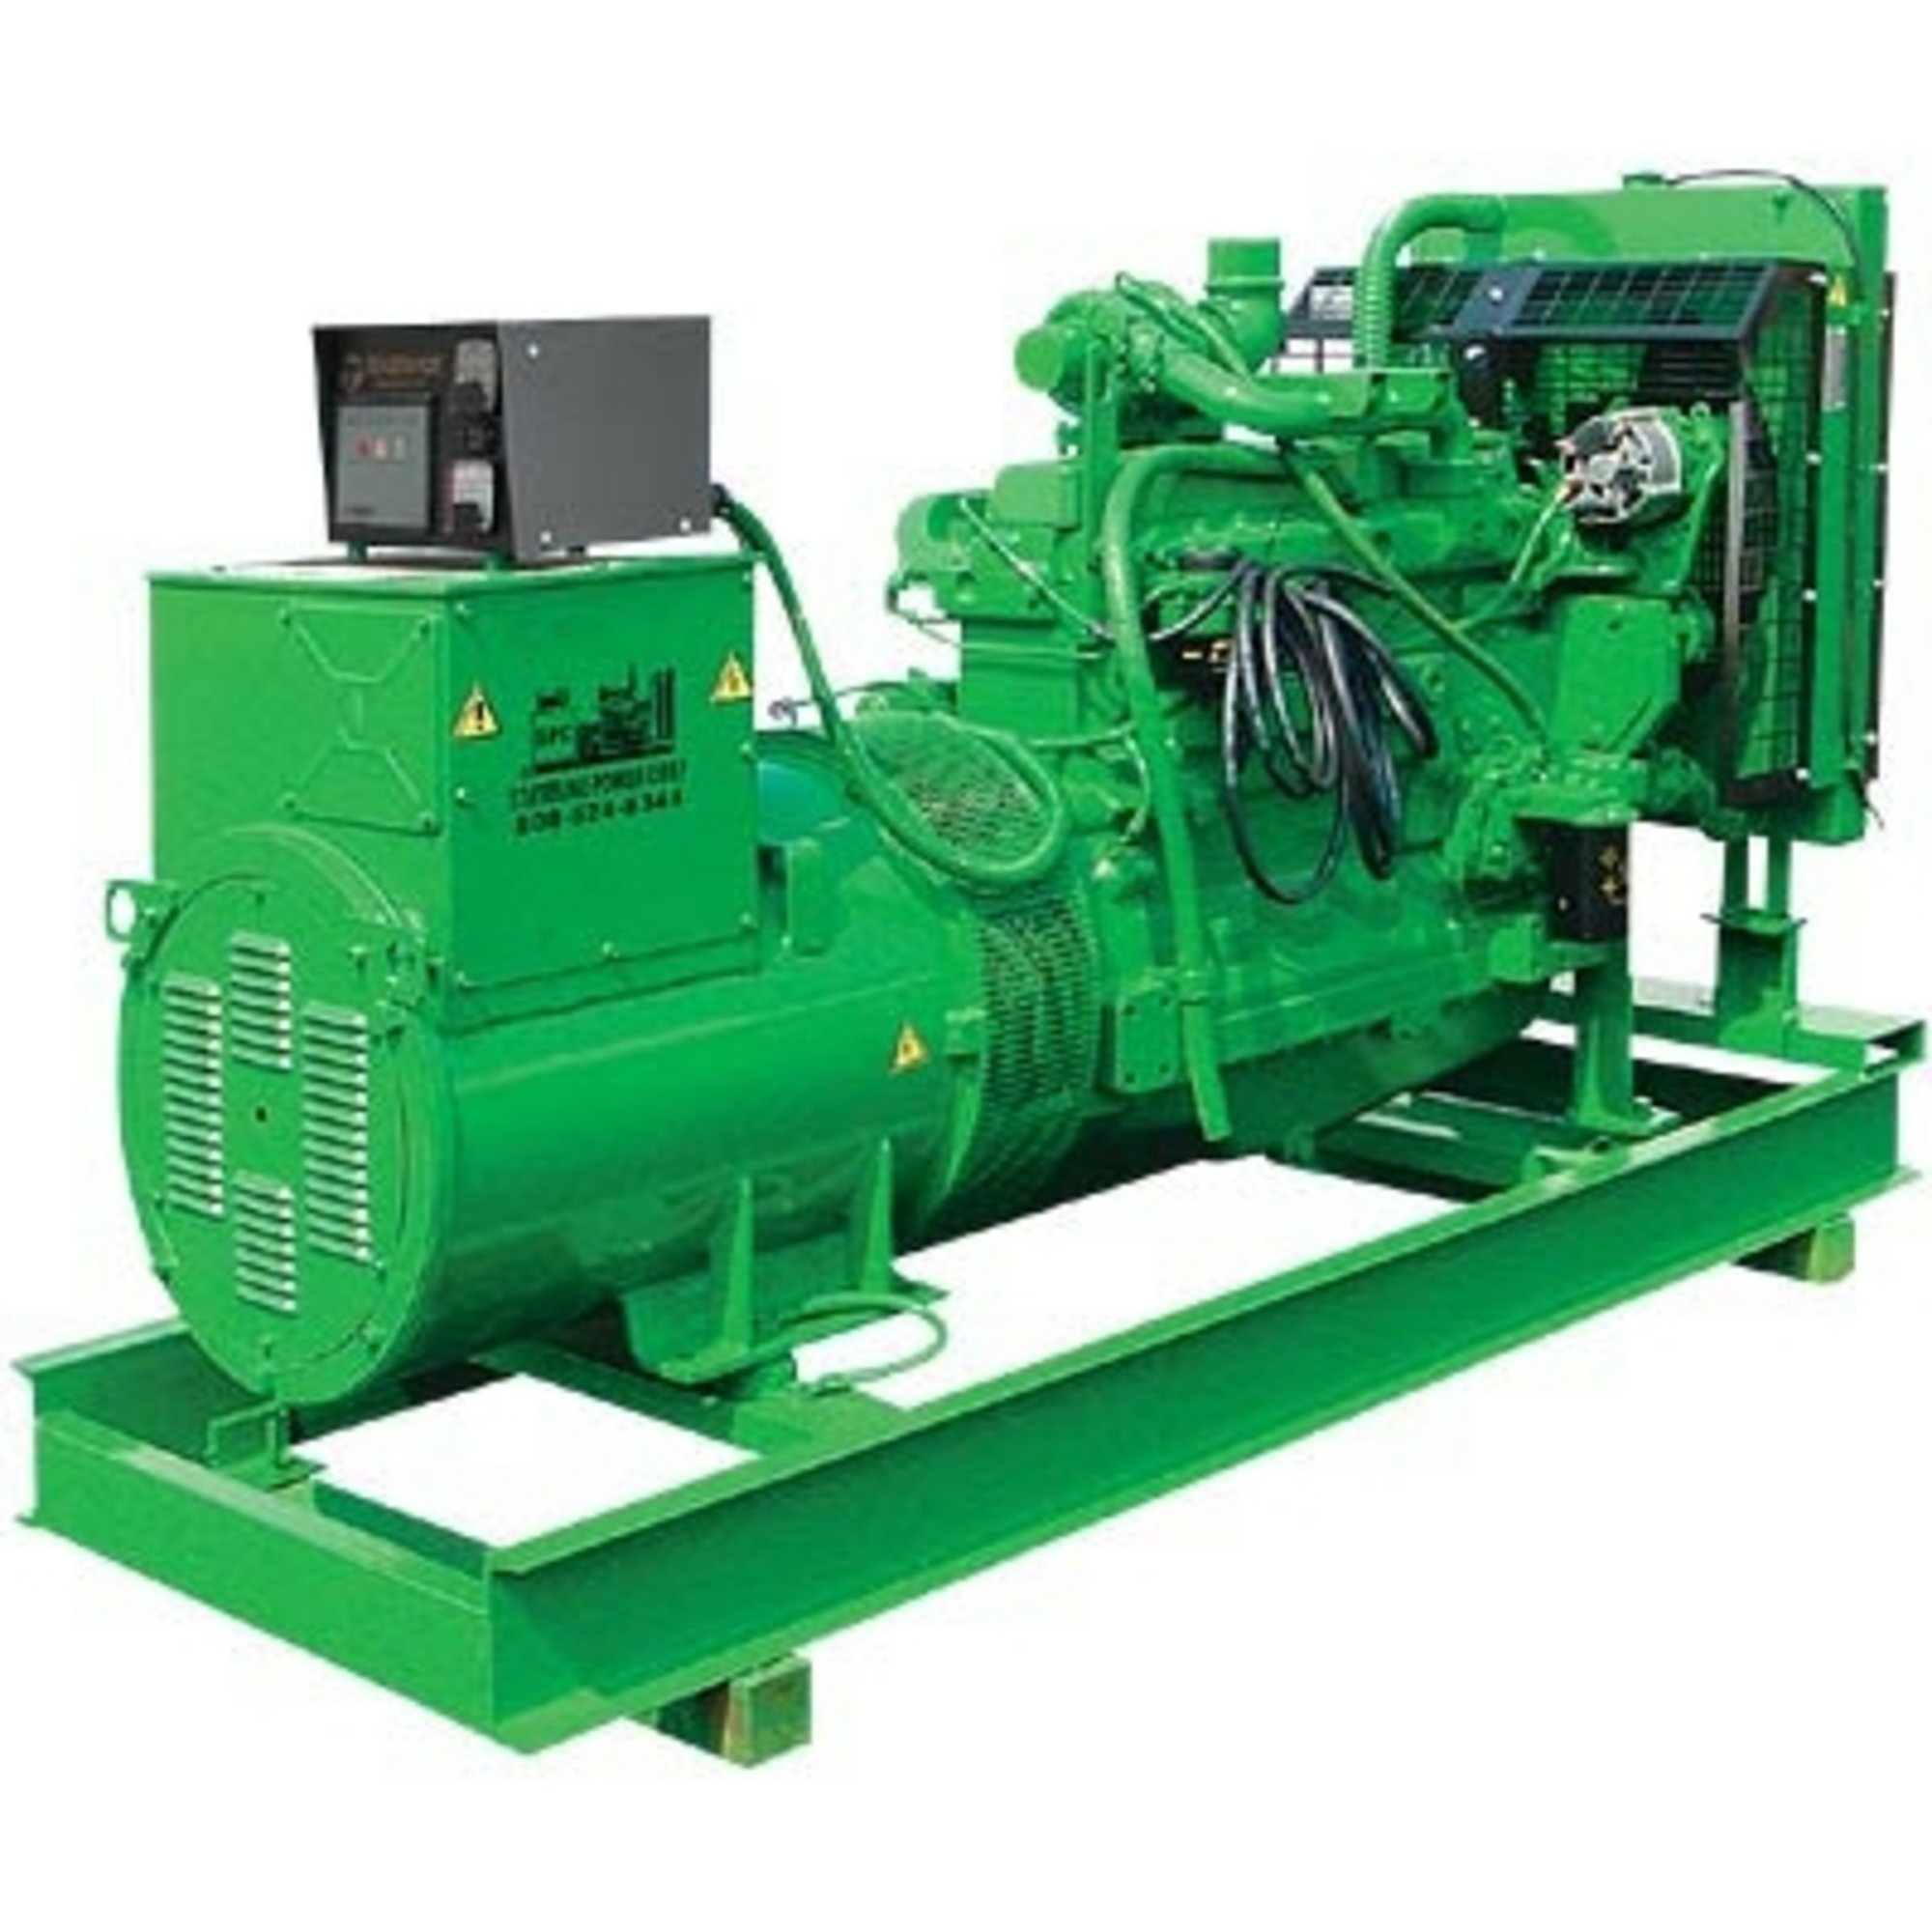 GoPower Generator Diesel Silent 6.8 kVA 220V/ 380 50 HZ With